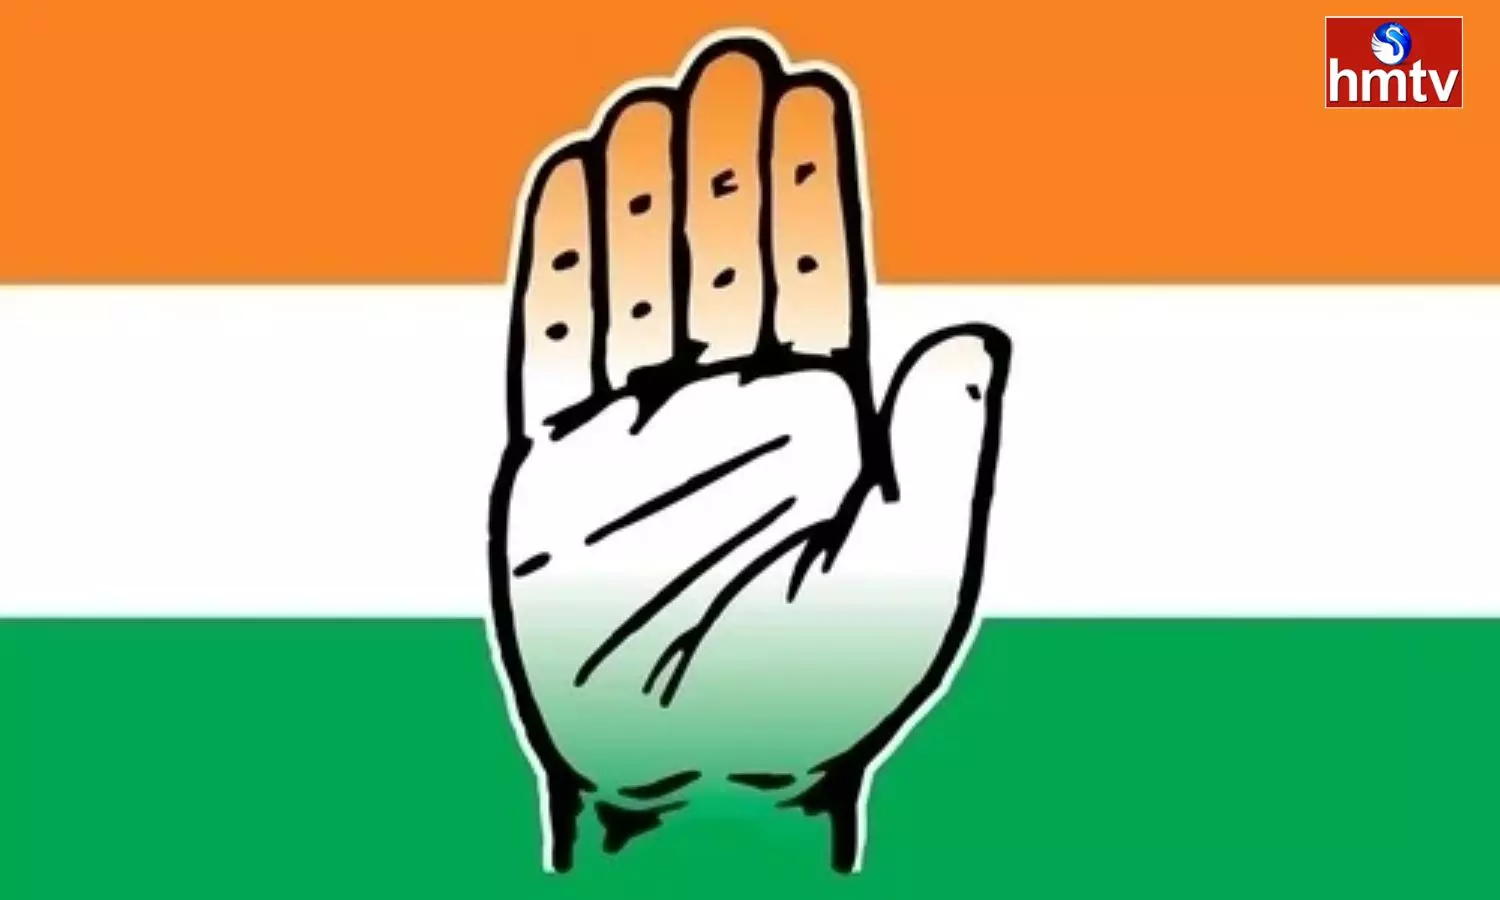 Congress Special Focus On Winning